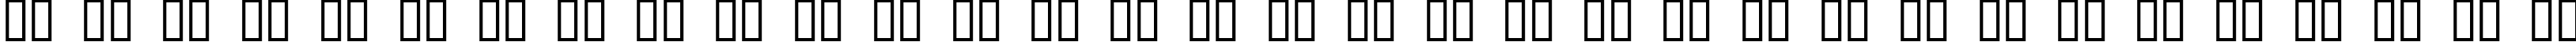 Пример написания русского алфавита шрифтом Anglo Text